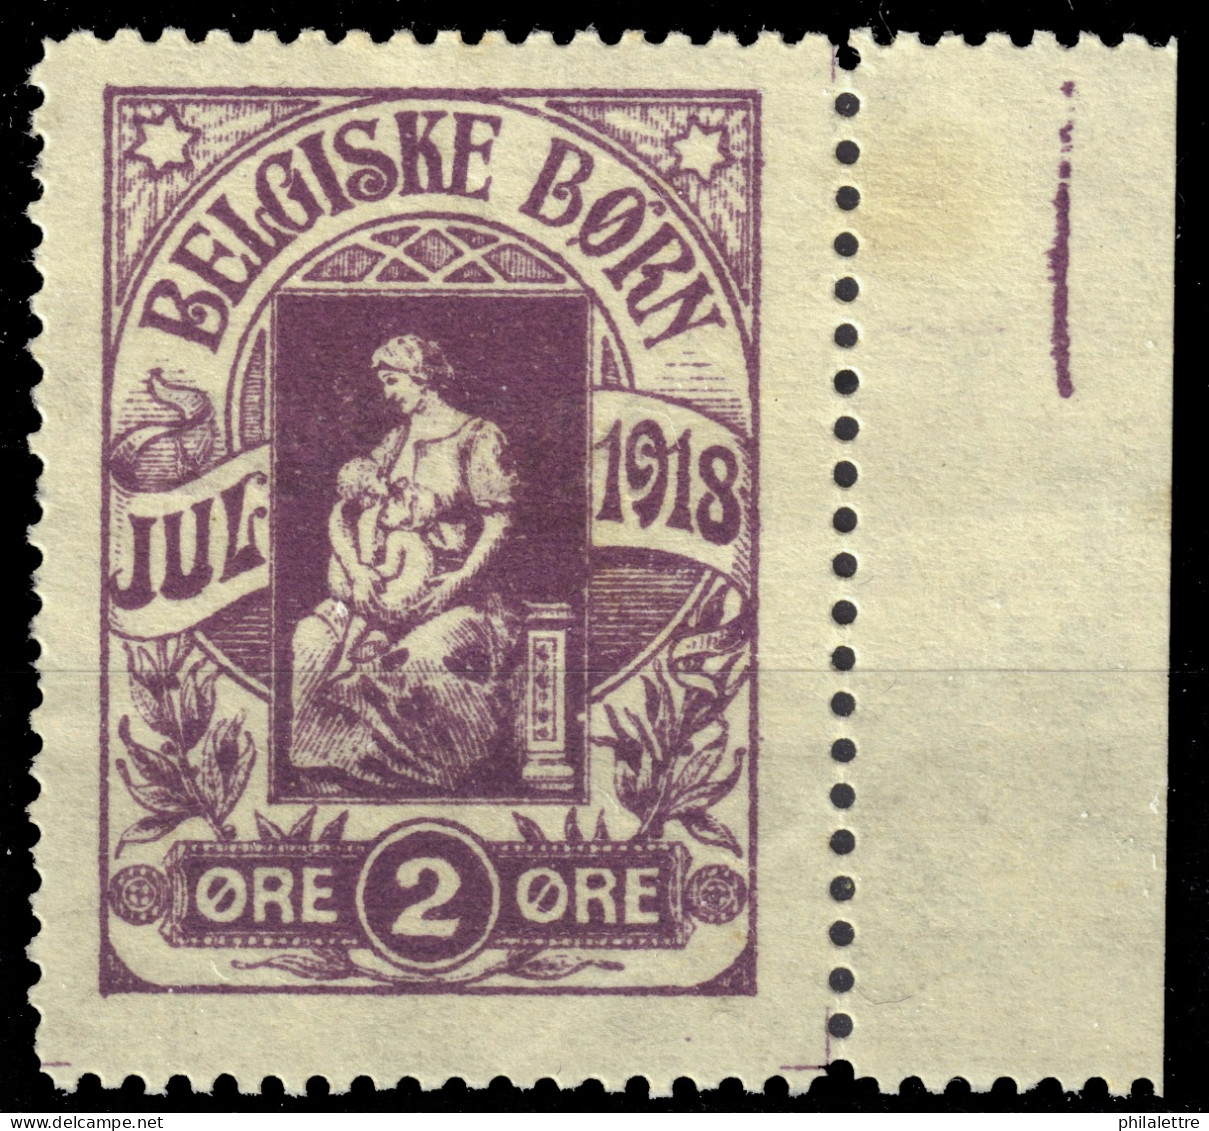 DANEMARK / DENMARK - Christmas 1918 - 2øre Purple "BELGISKE BØRN" (Belgian Children) Charity Stamp (marked NORGE On Gum) - Kerstmis